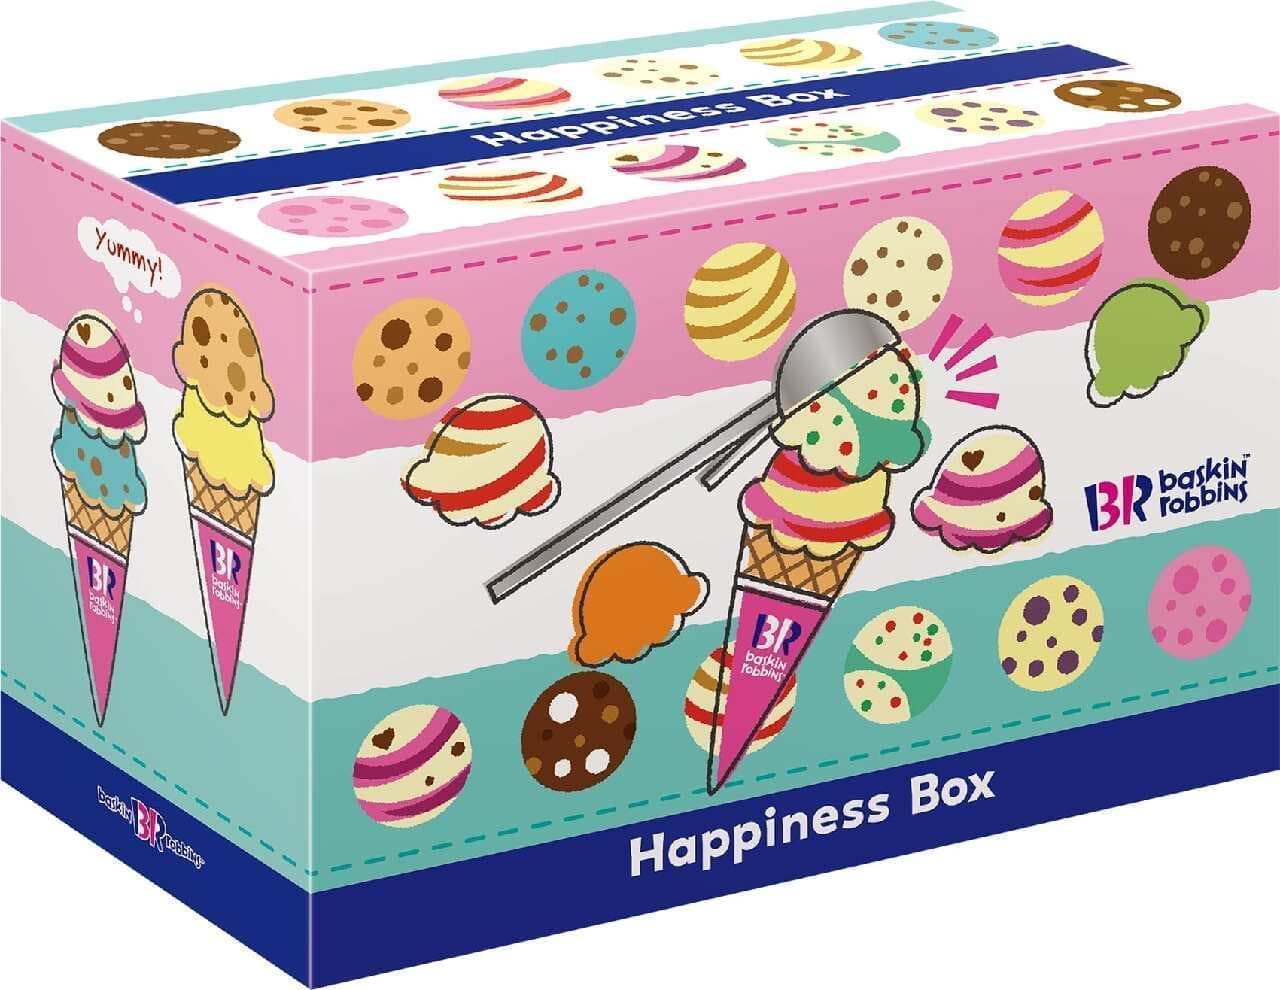 Thirty-One "Happiness Box